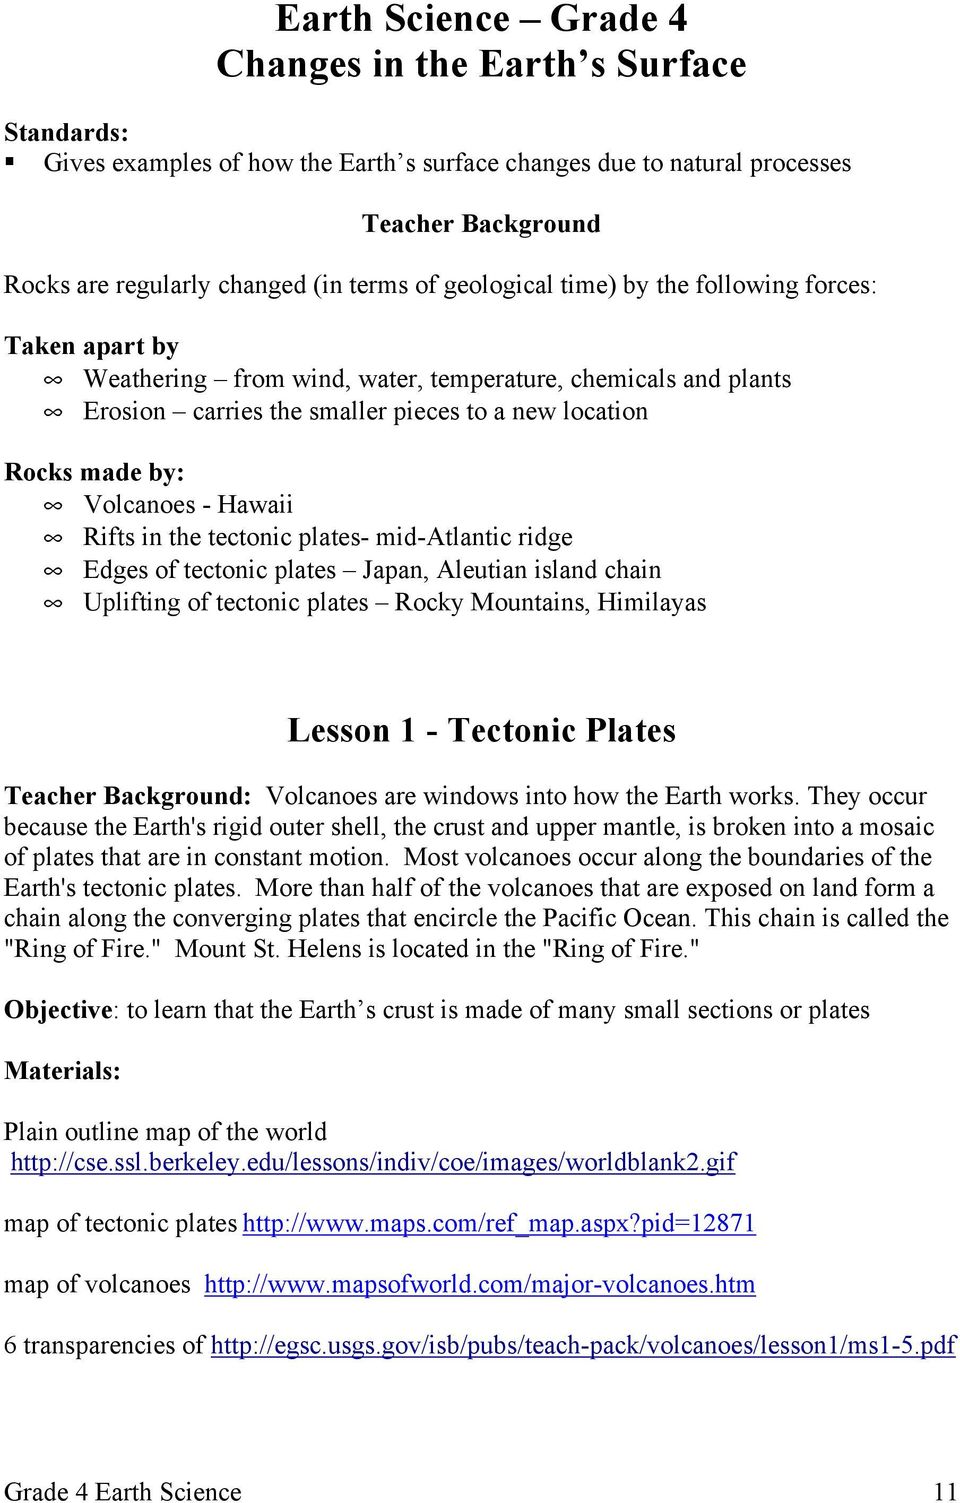 Hawaii Rifts in the tectonic plates- mid-atlantic ridge Edges of tectonic plates Japan, Aleutian island chain Uplifting of tectonic plates Rocky Mountains, Himilayas Lesson 1 - Tectonic Plates